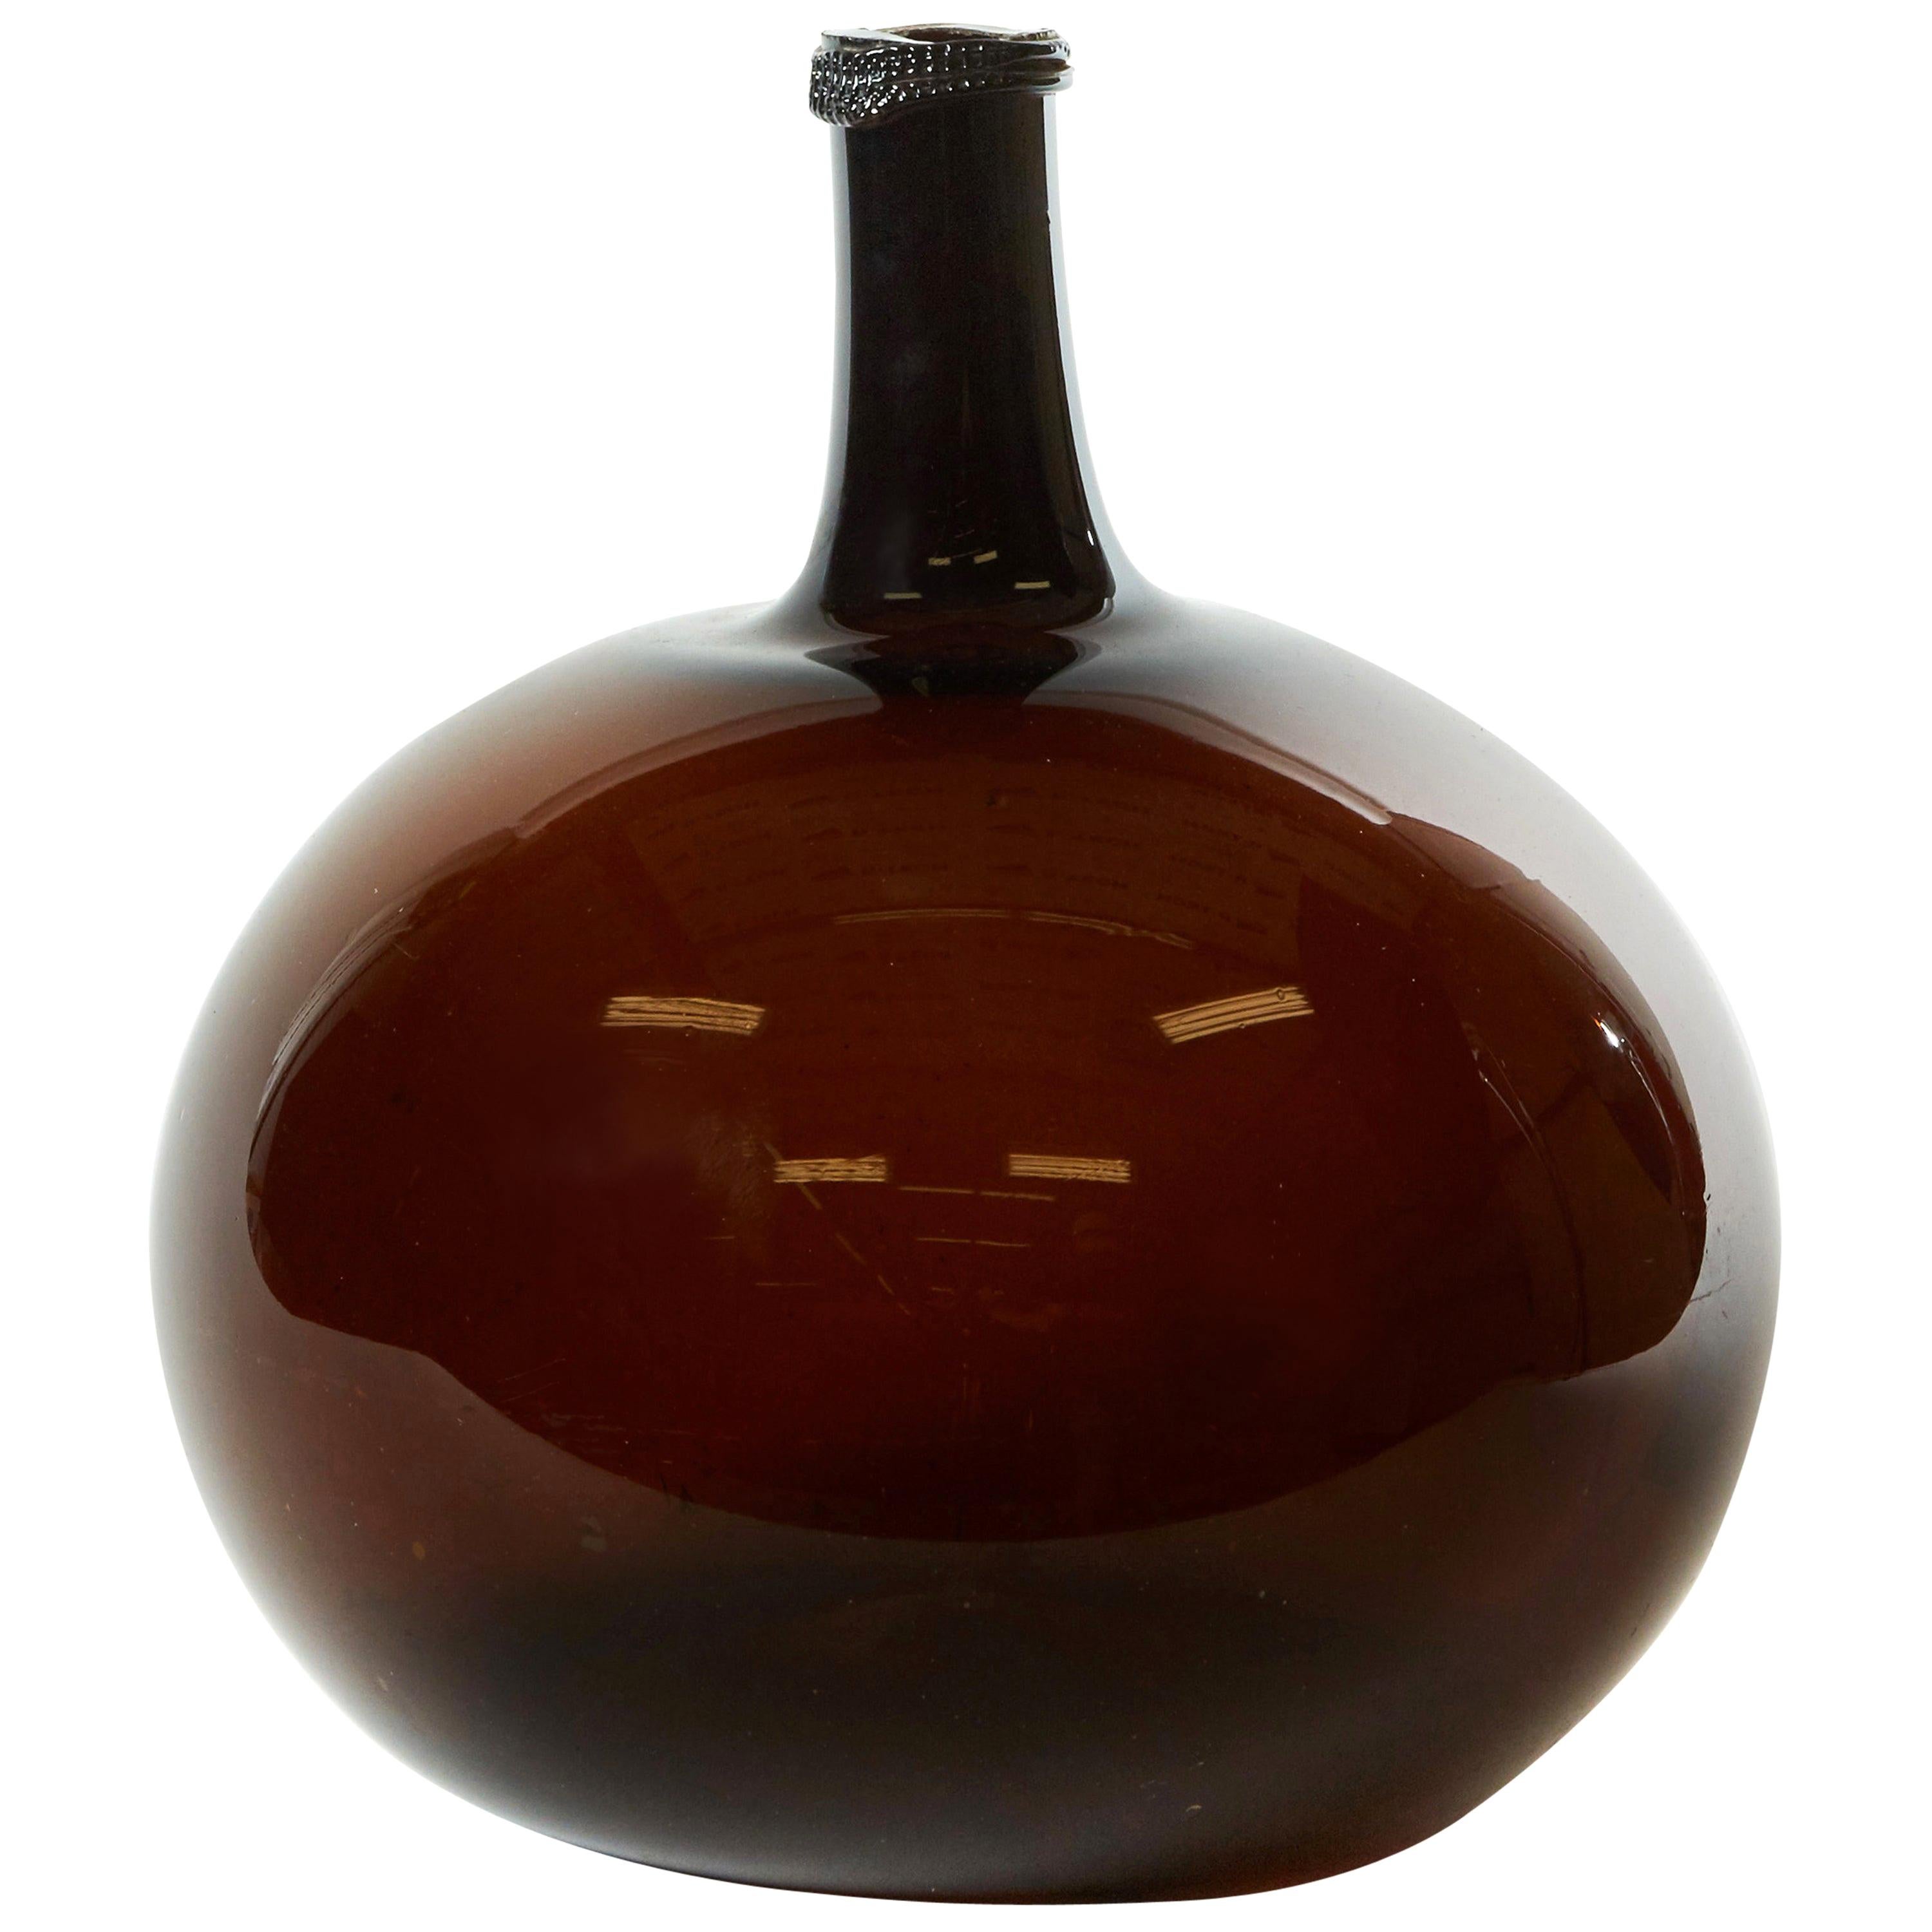 19th Century Brown Blown Glass Bottle or Spirit Keg from Burgundy, France